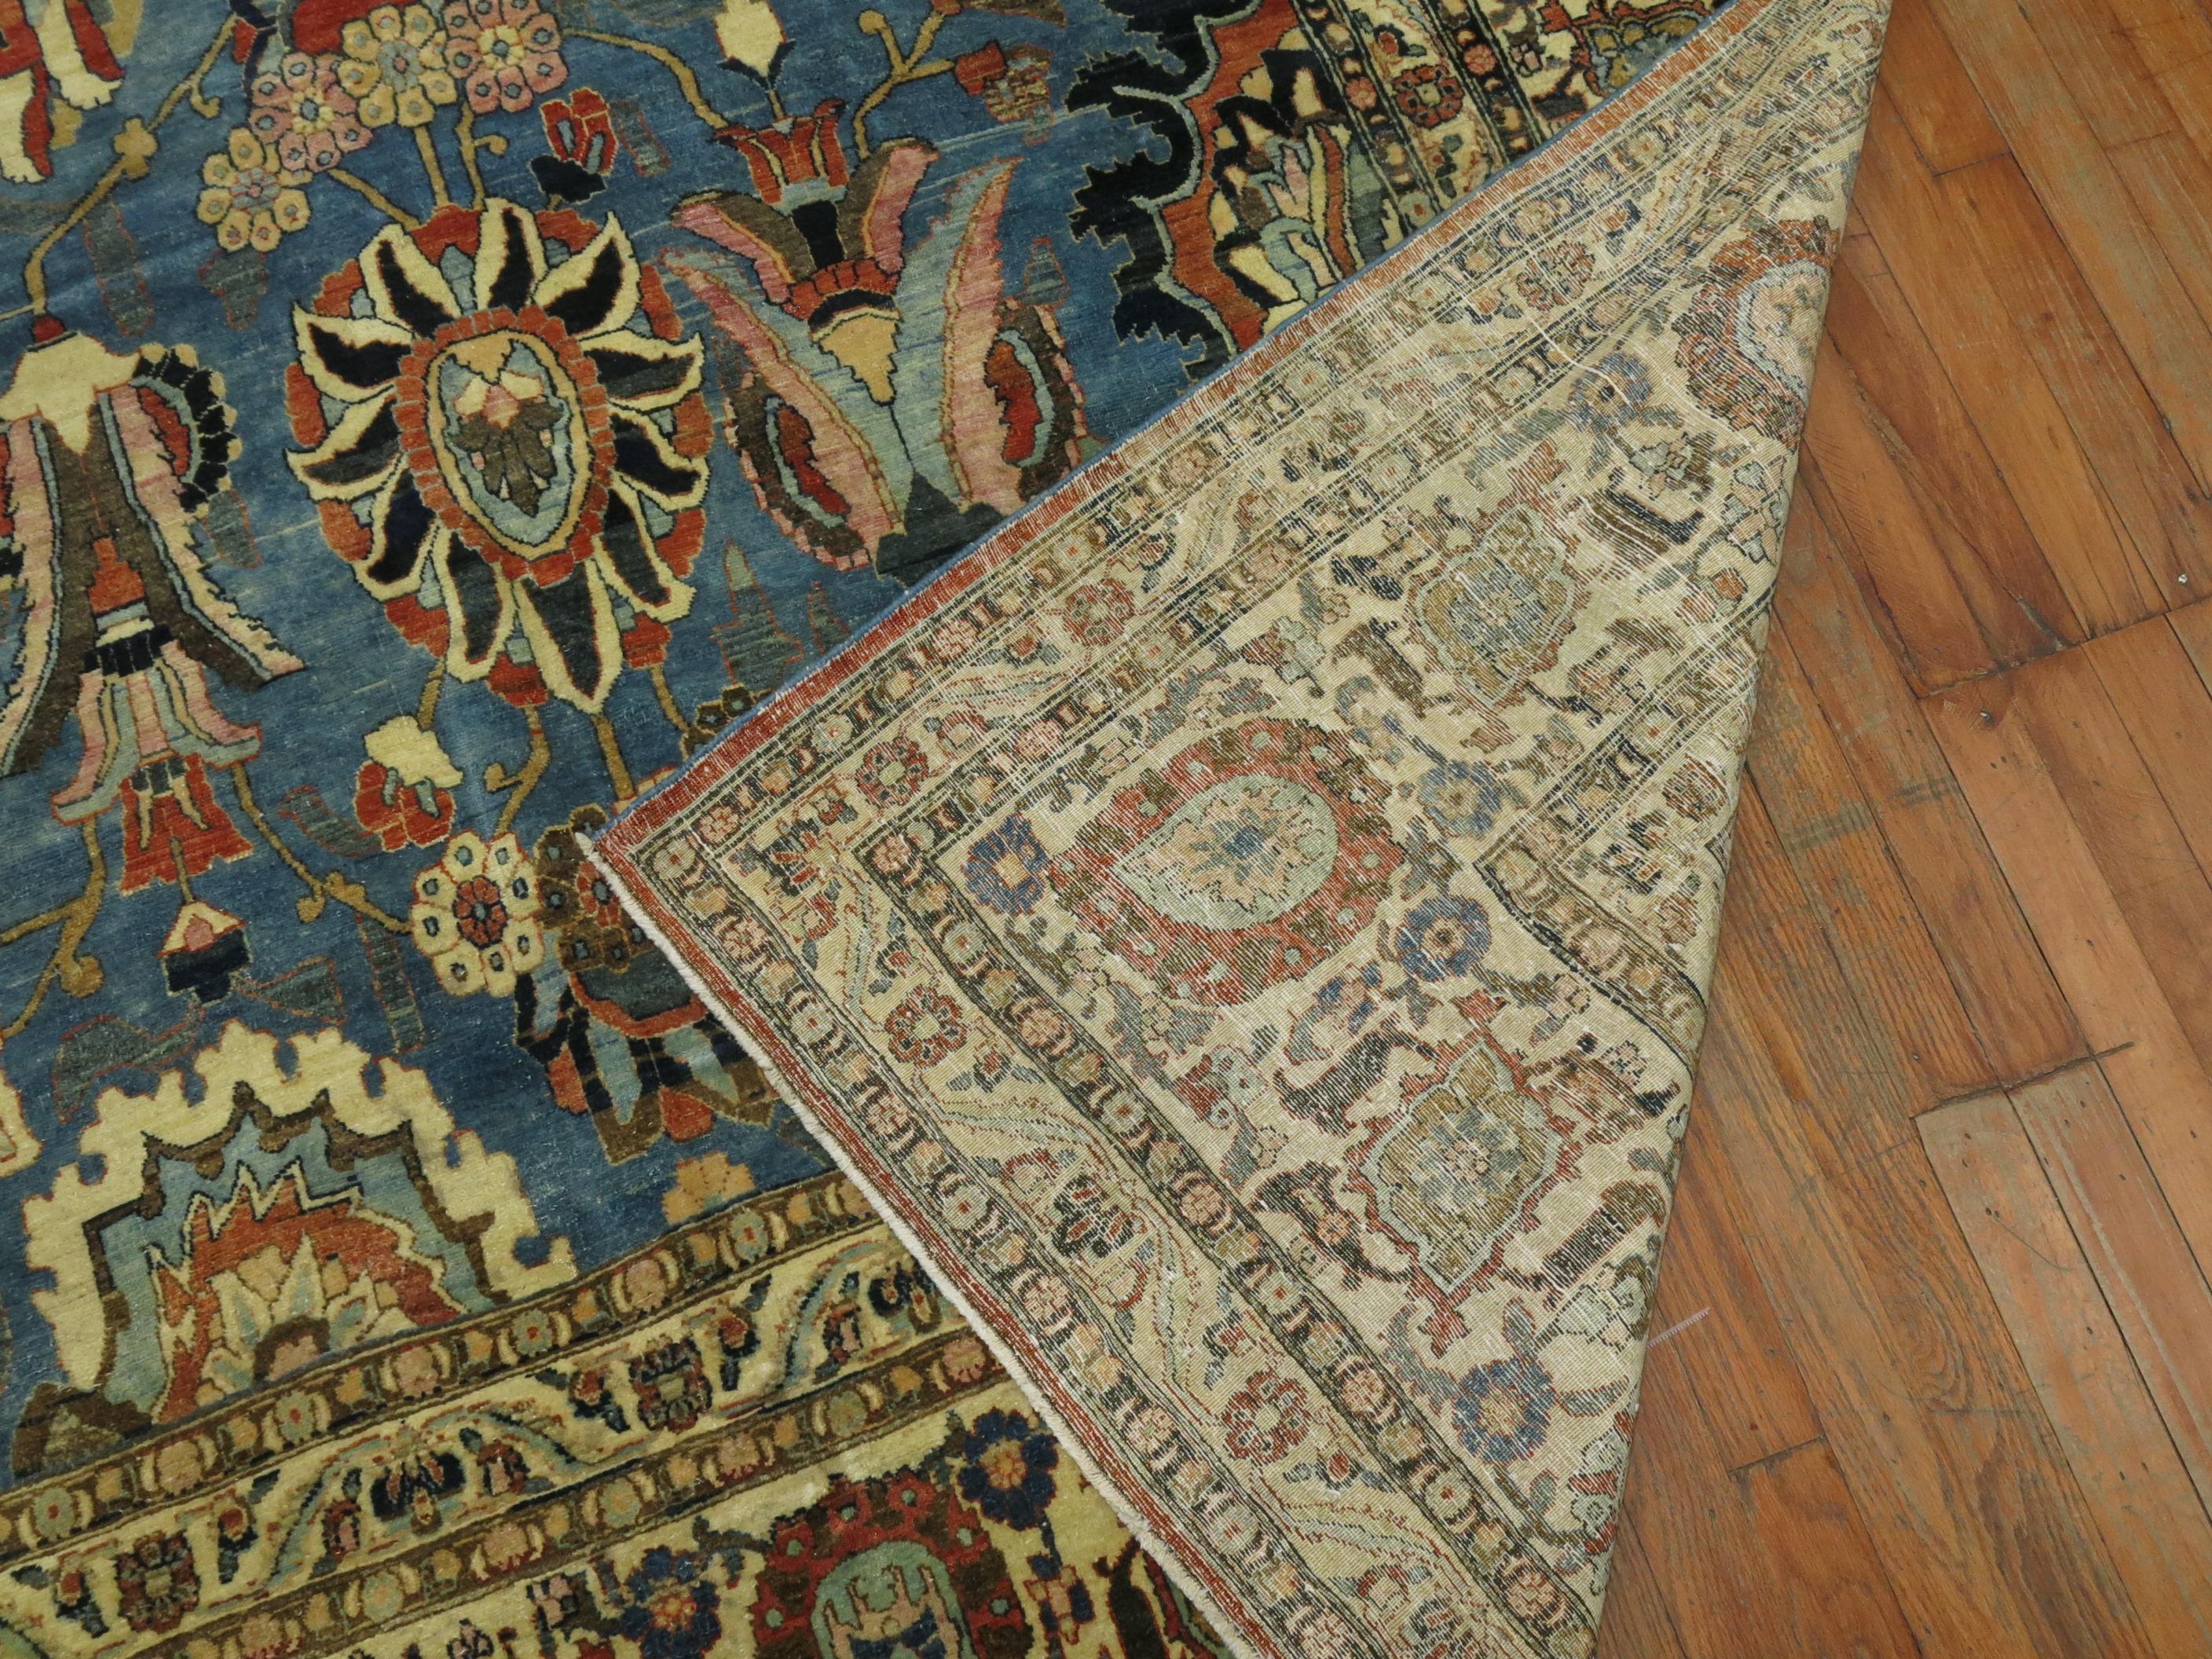  Zabihi Collection Antique Persian Tabriz Carpet For Sale 5